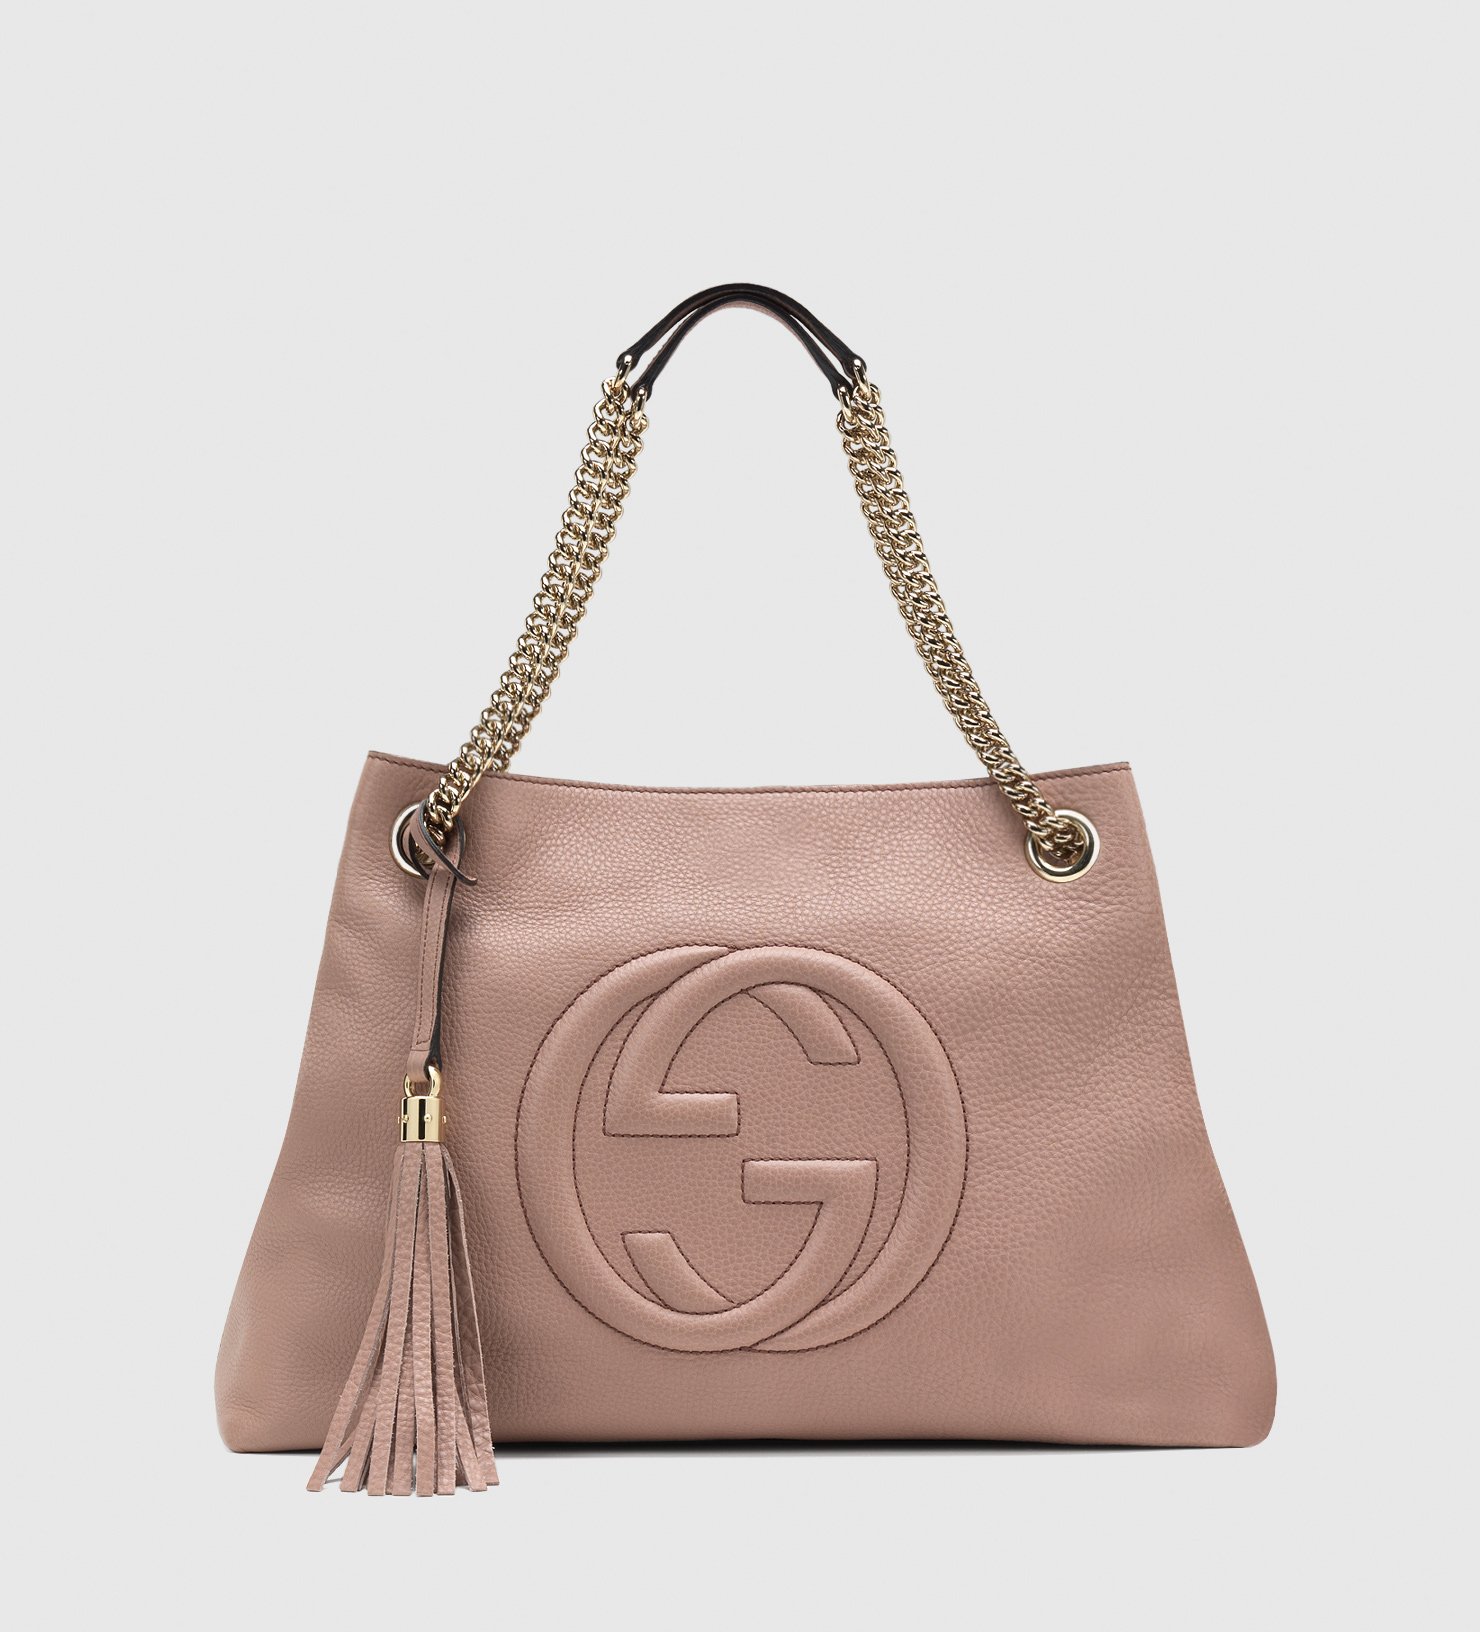 Lyst - Gucci Soho Leather Shoulder Bag in Natural